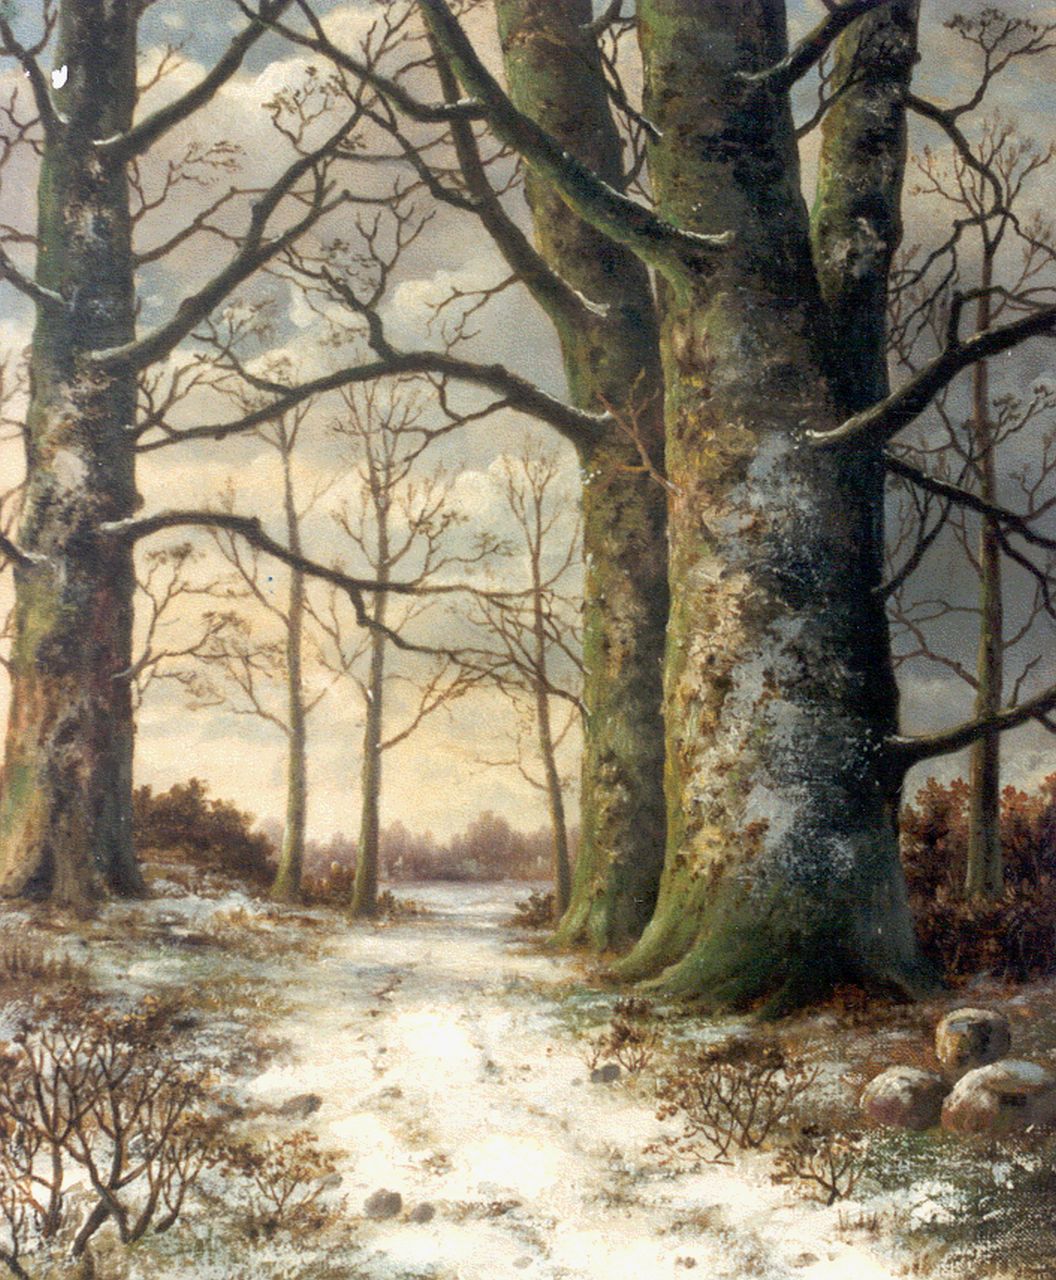 Koekkoek B.H.  | Barend Hendrik 'H.B.' Koekkoek, A forest landscape in winter, oil on canvas 53.3 x 43.2 cm, signed l.r.